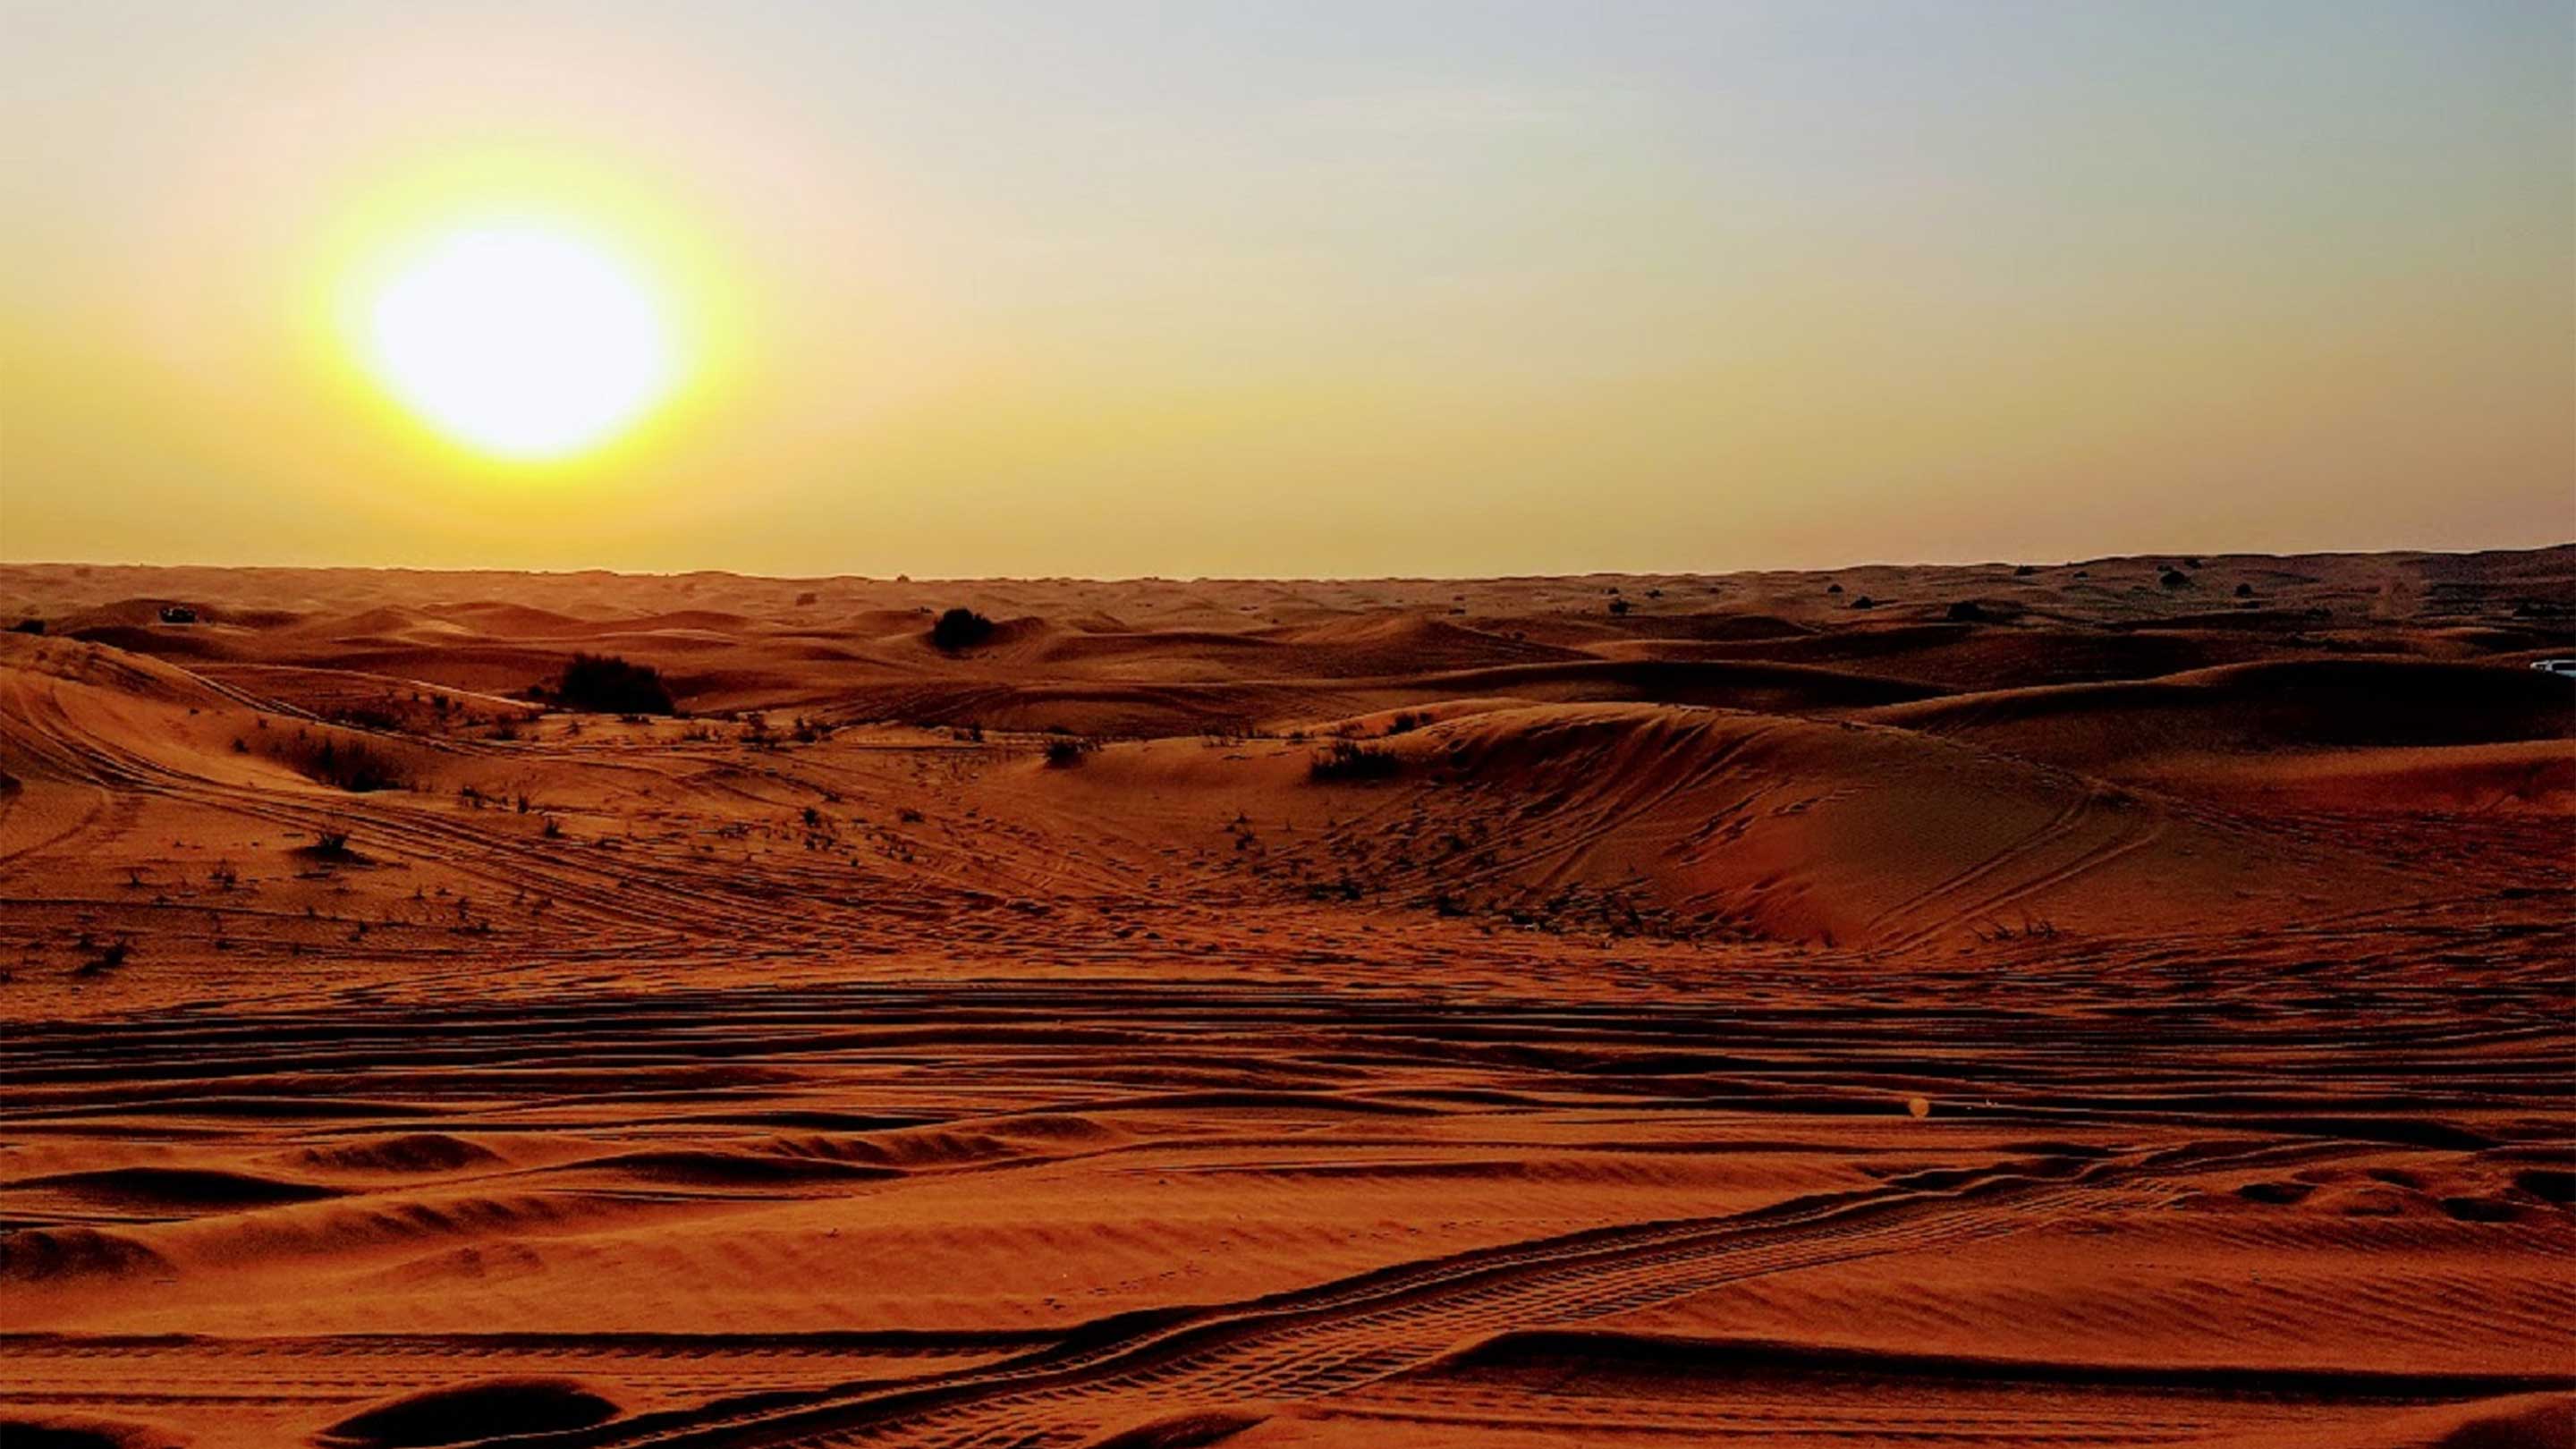 16-9 Photo Copy of Dubai Desert